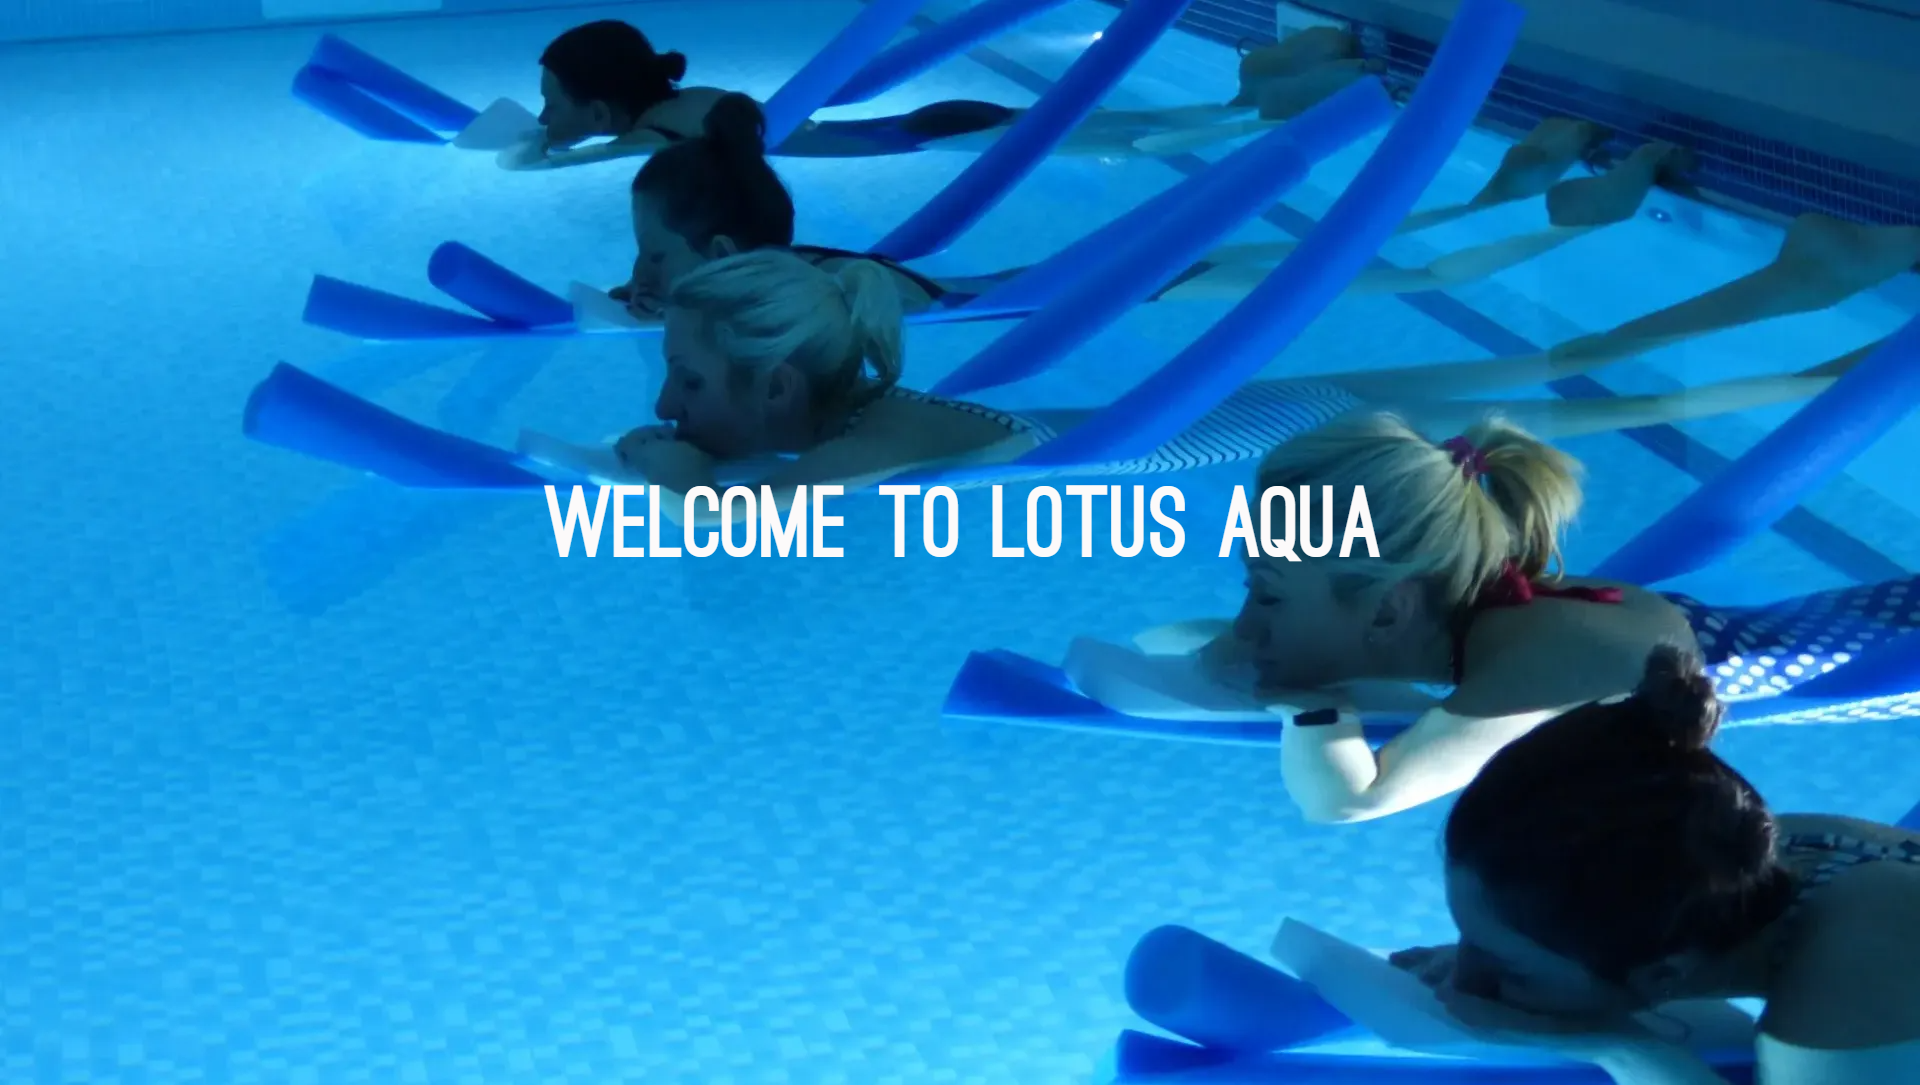 Lotus Aqua